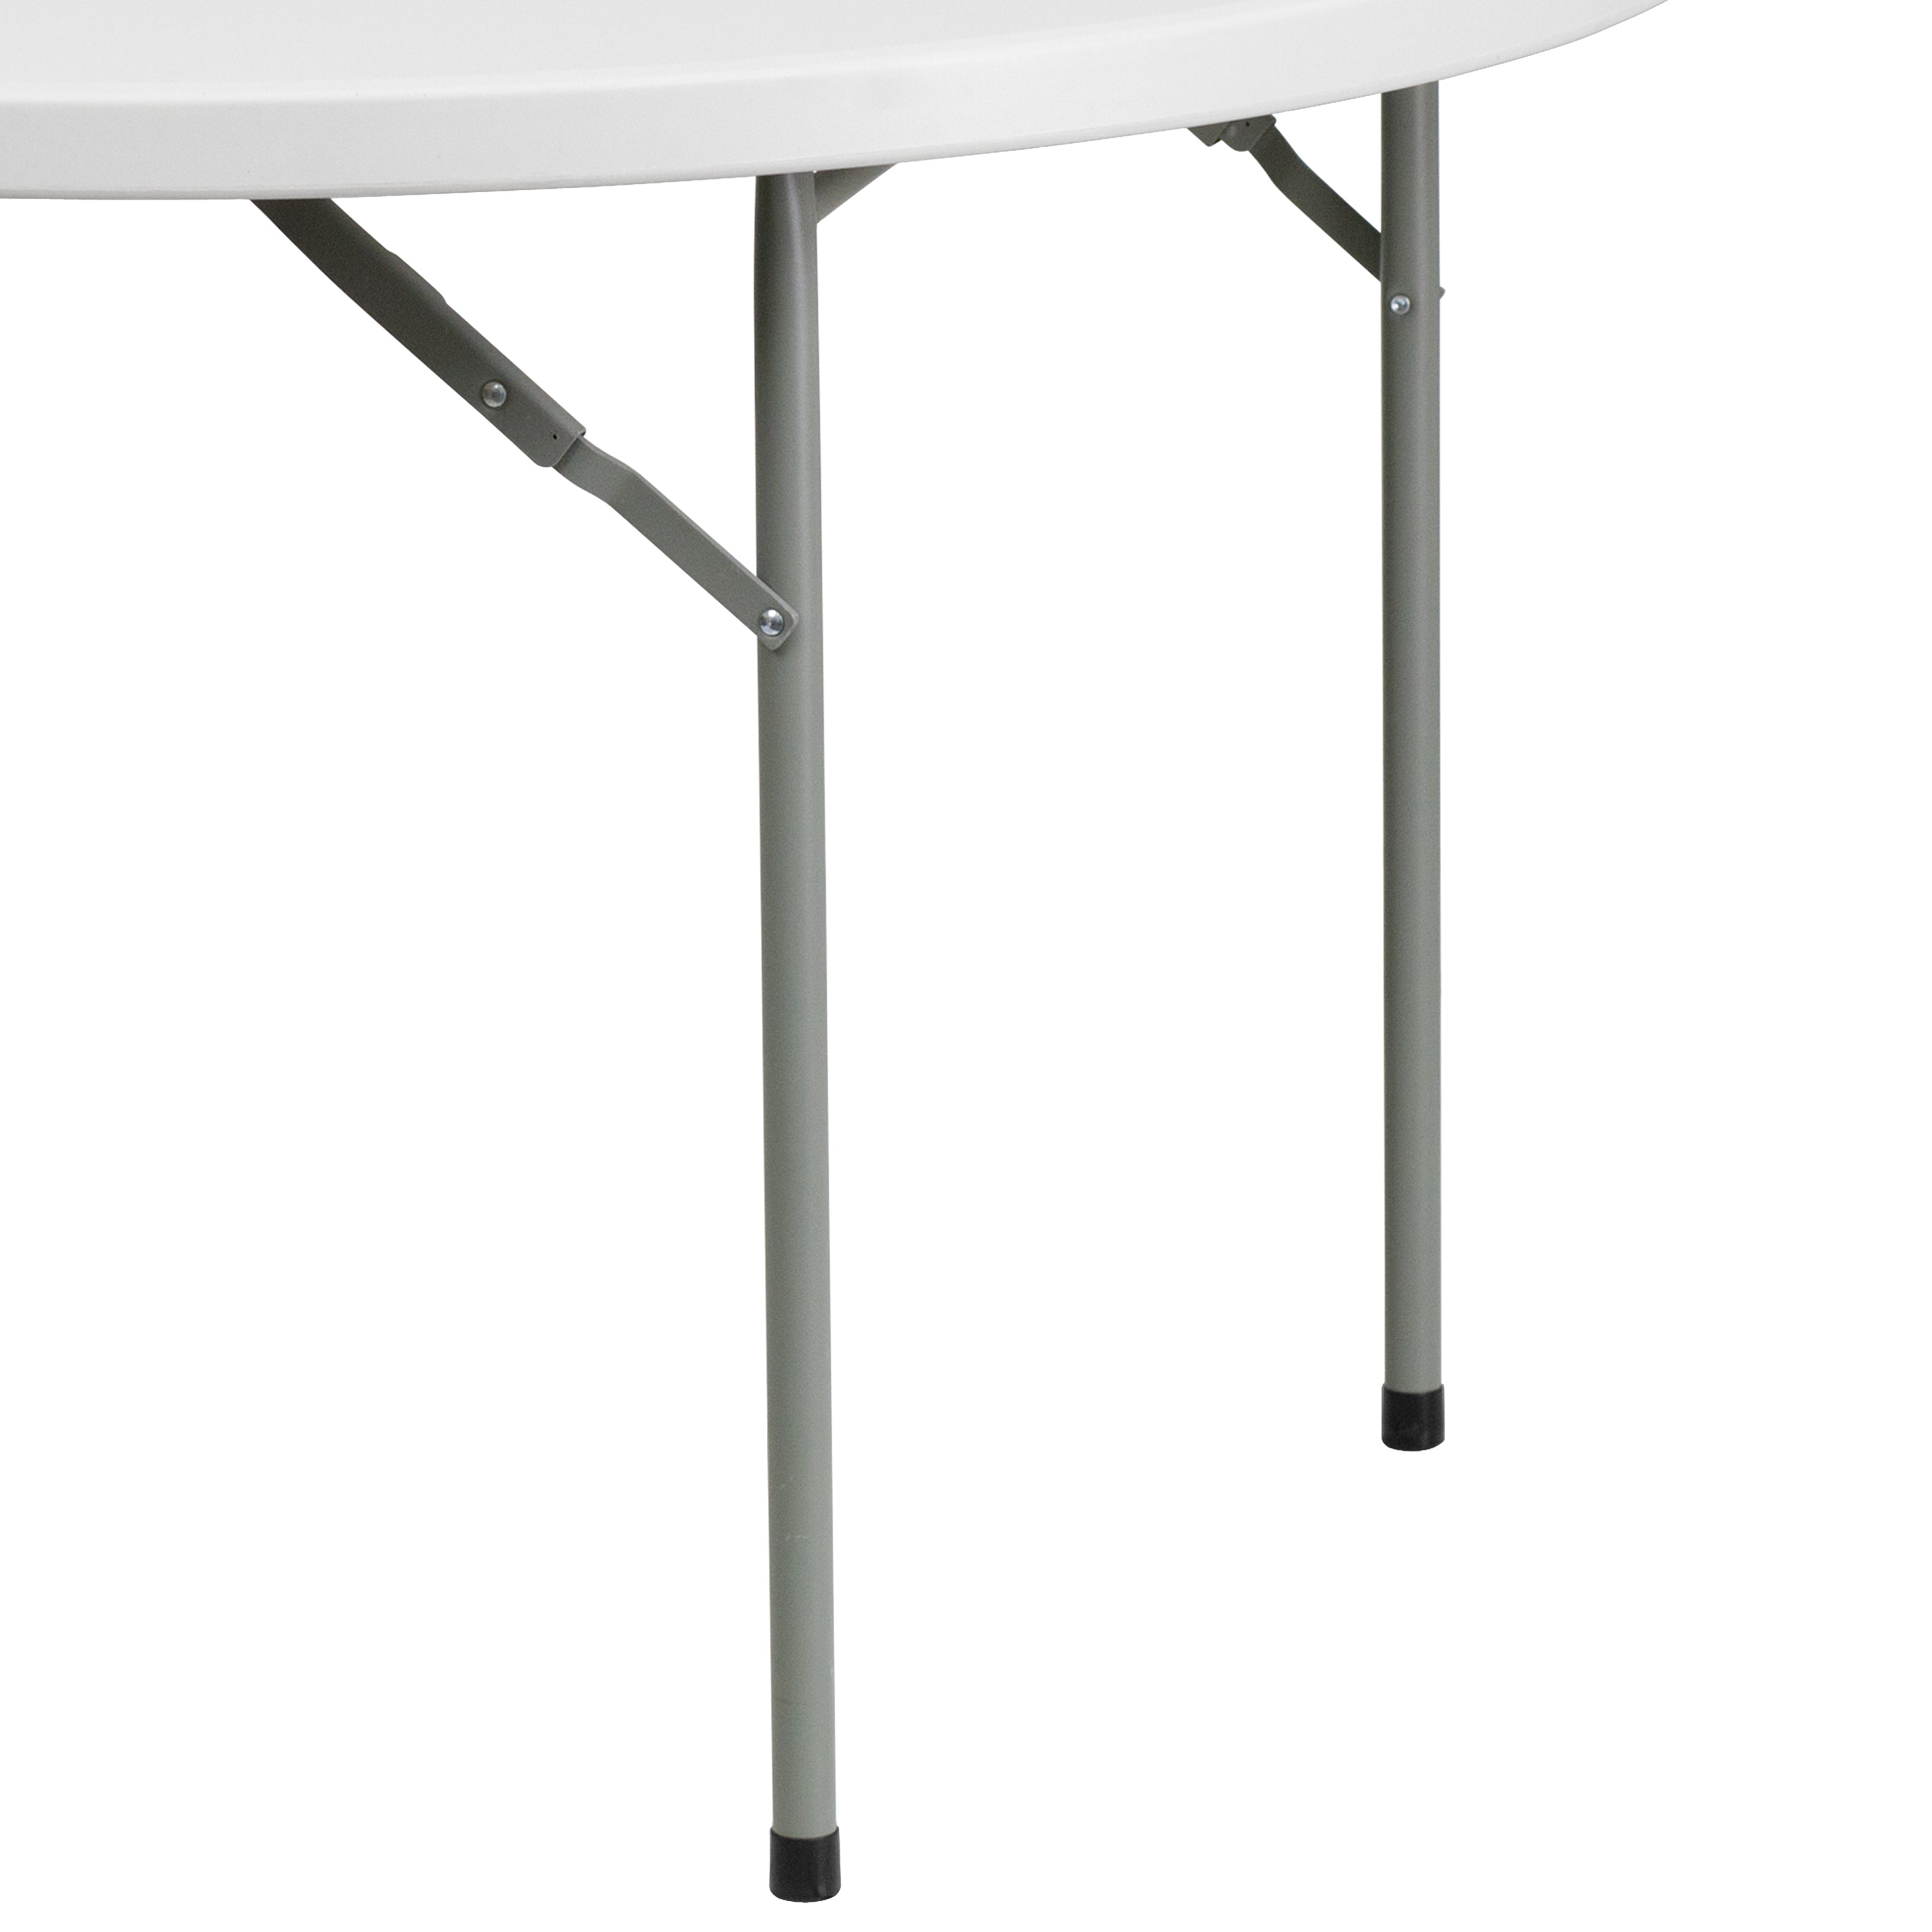 4-Foot Round Plastic Folding Table-Round Plastic Folding Table-Flash Furniture-Wall2Wall Furnishings